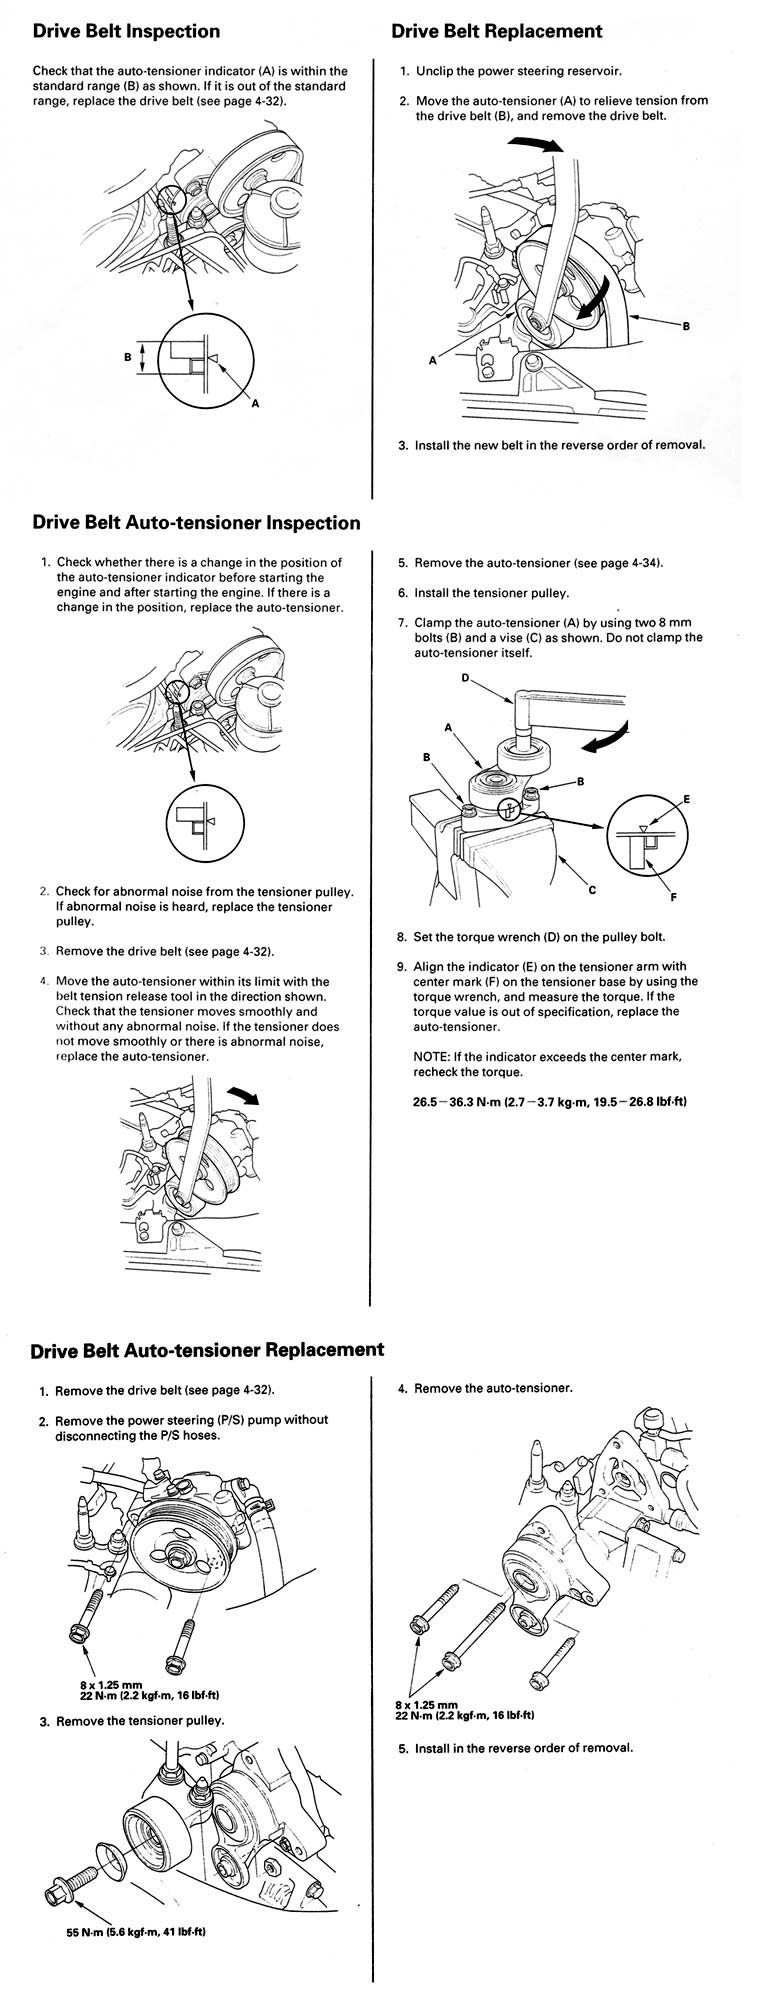 Honda K20a Engine Diagram | Wiring Library